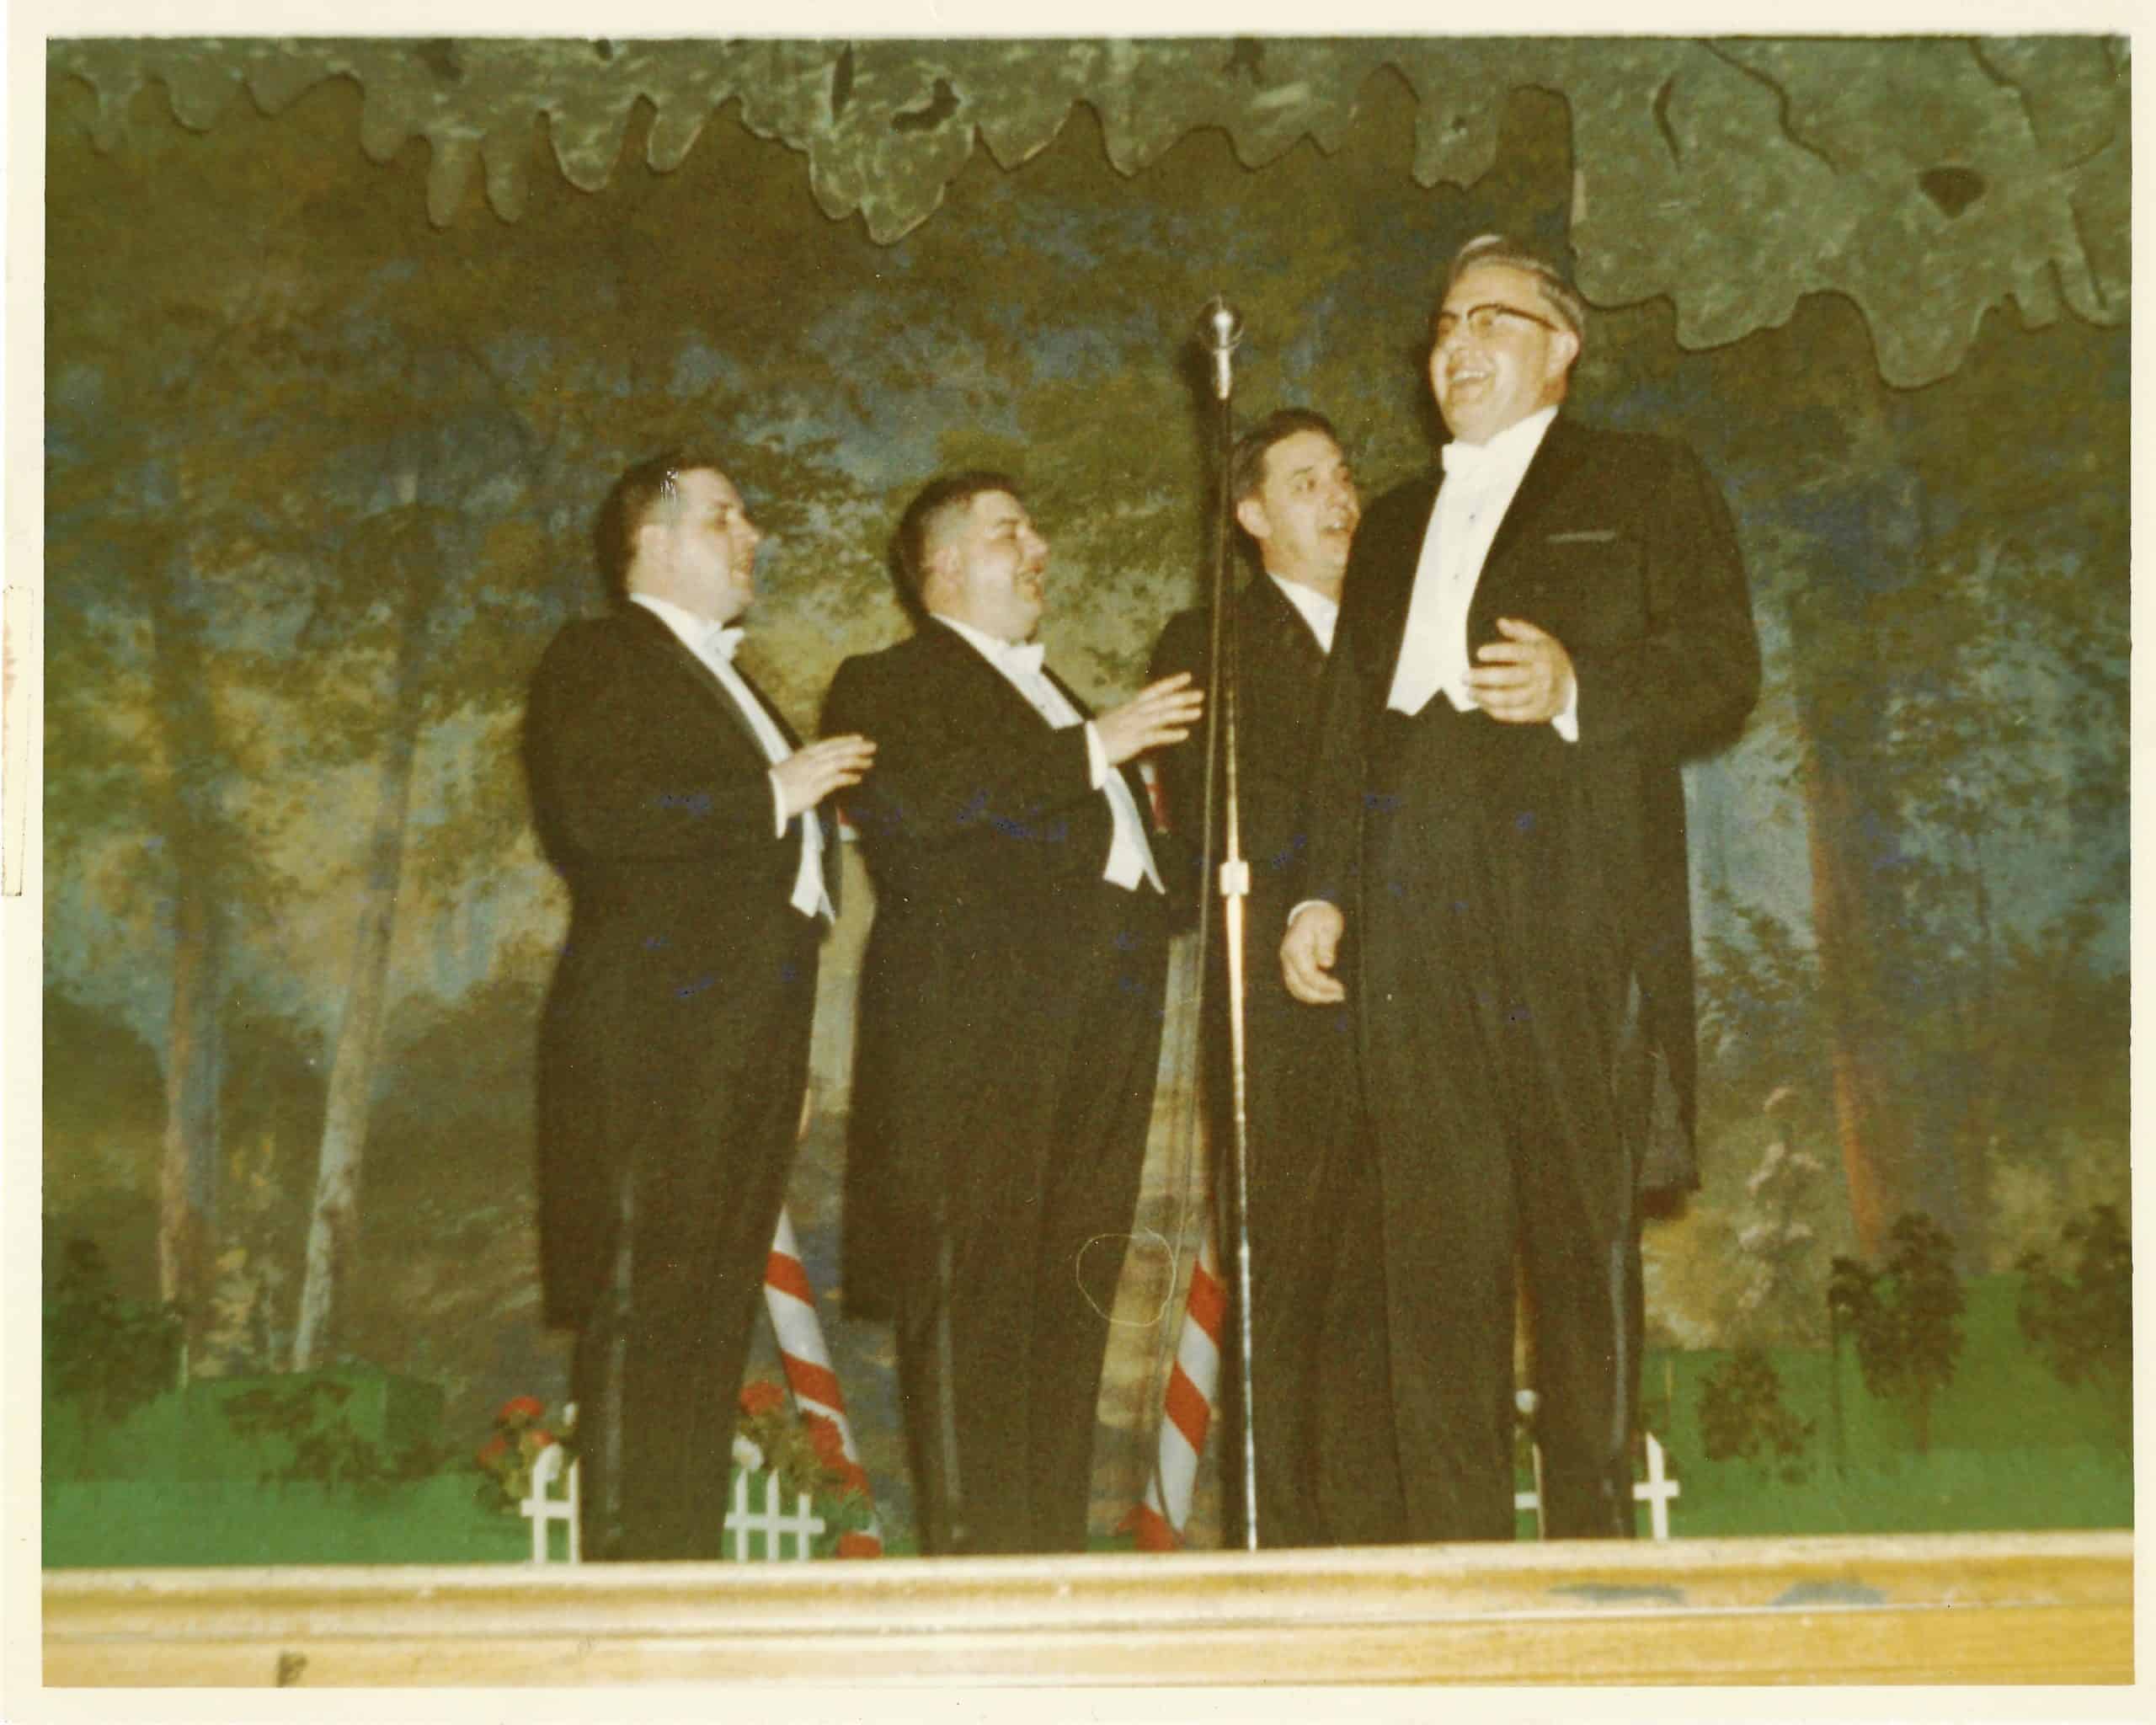 Schmitt Brothers barbershop quartet performing in 1967.